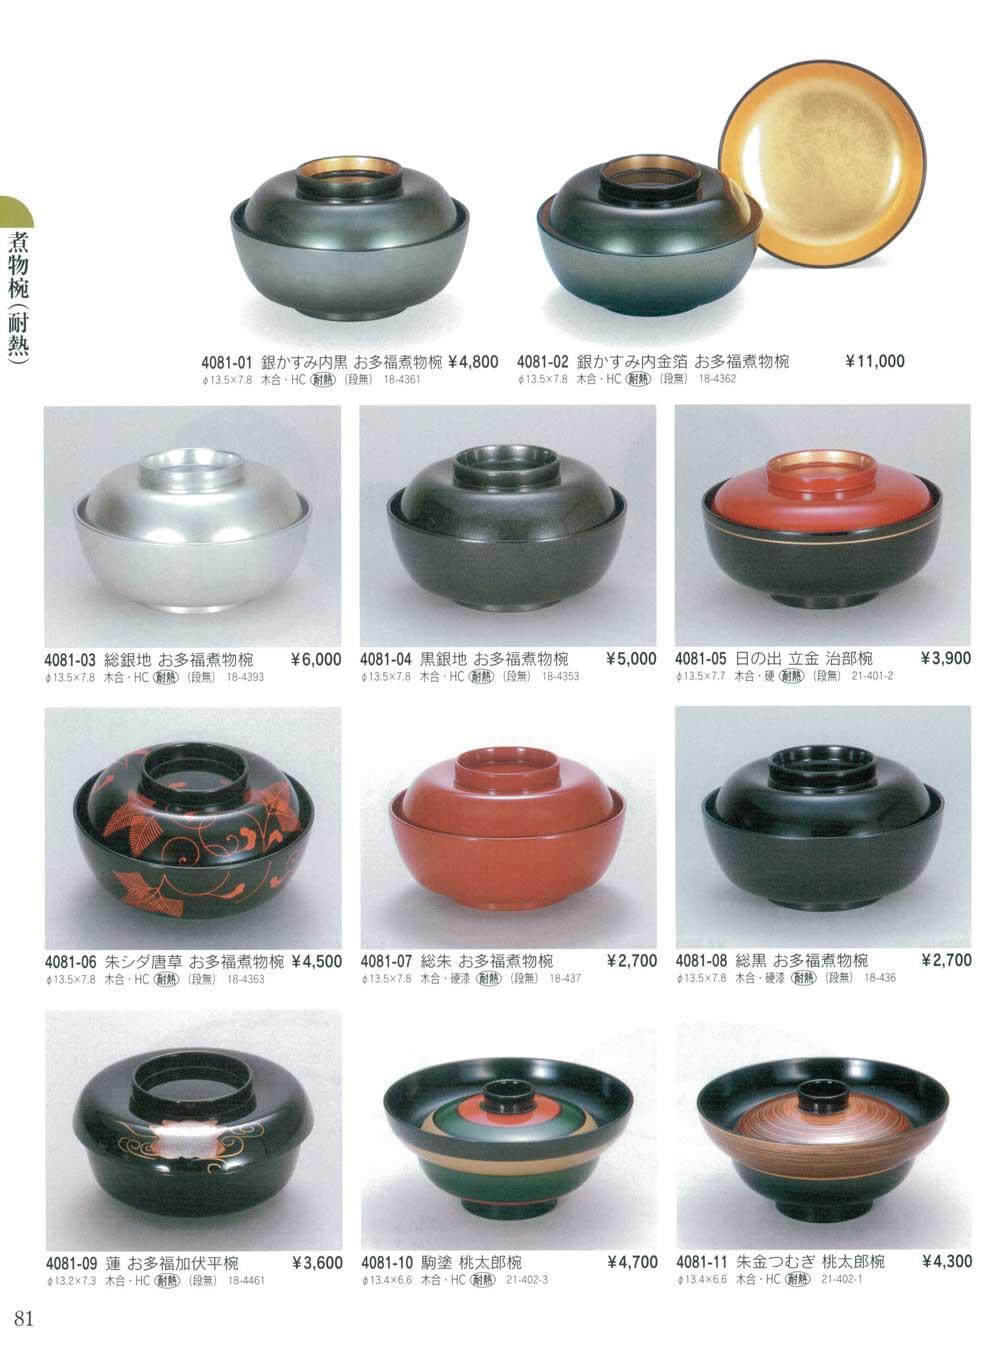 食器 耐熱煮物椀・お多福煮物椀・桃太郎椀Bowls of Stewed Food(Heat 